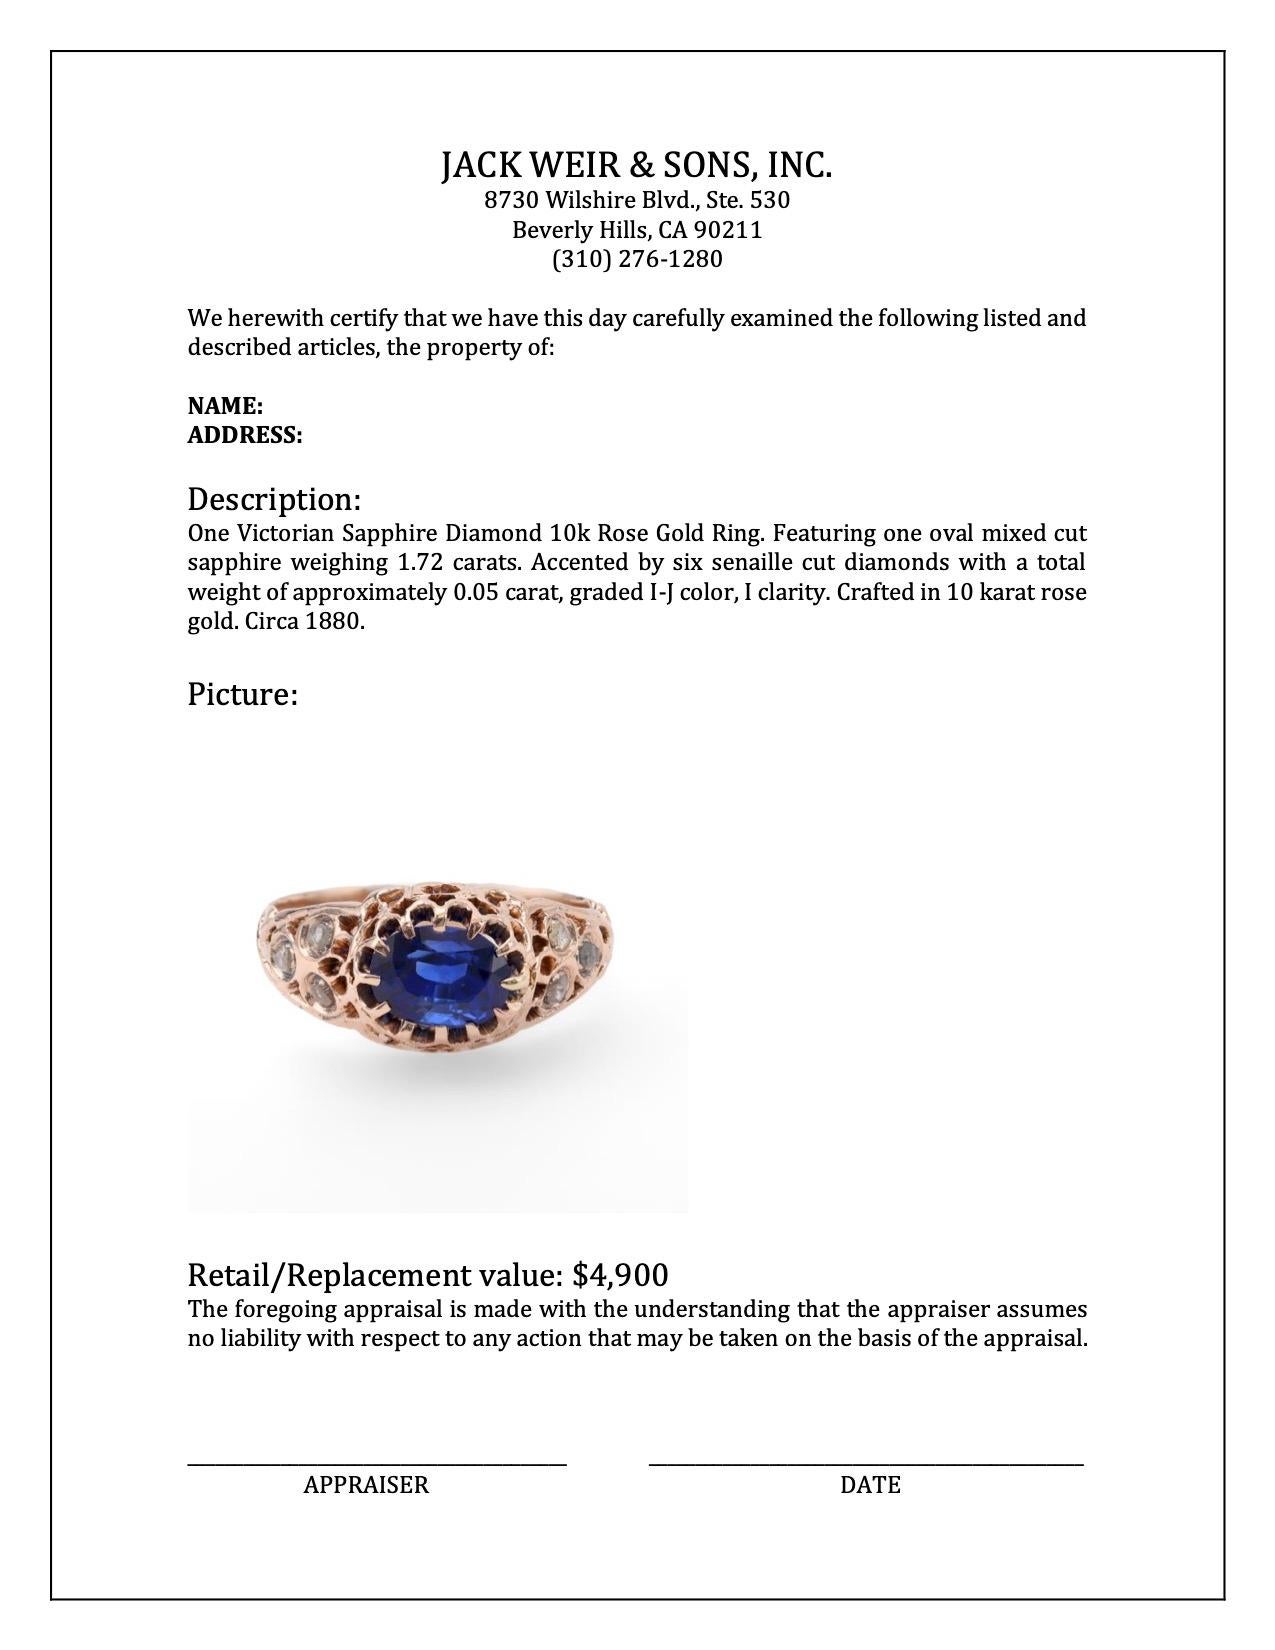 Women's or Men's Victorian Sapphire Diamond 10k Rose Gold Ring For Sale